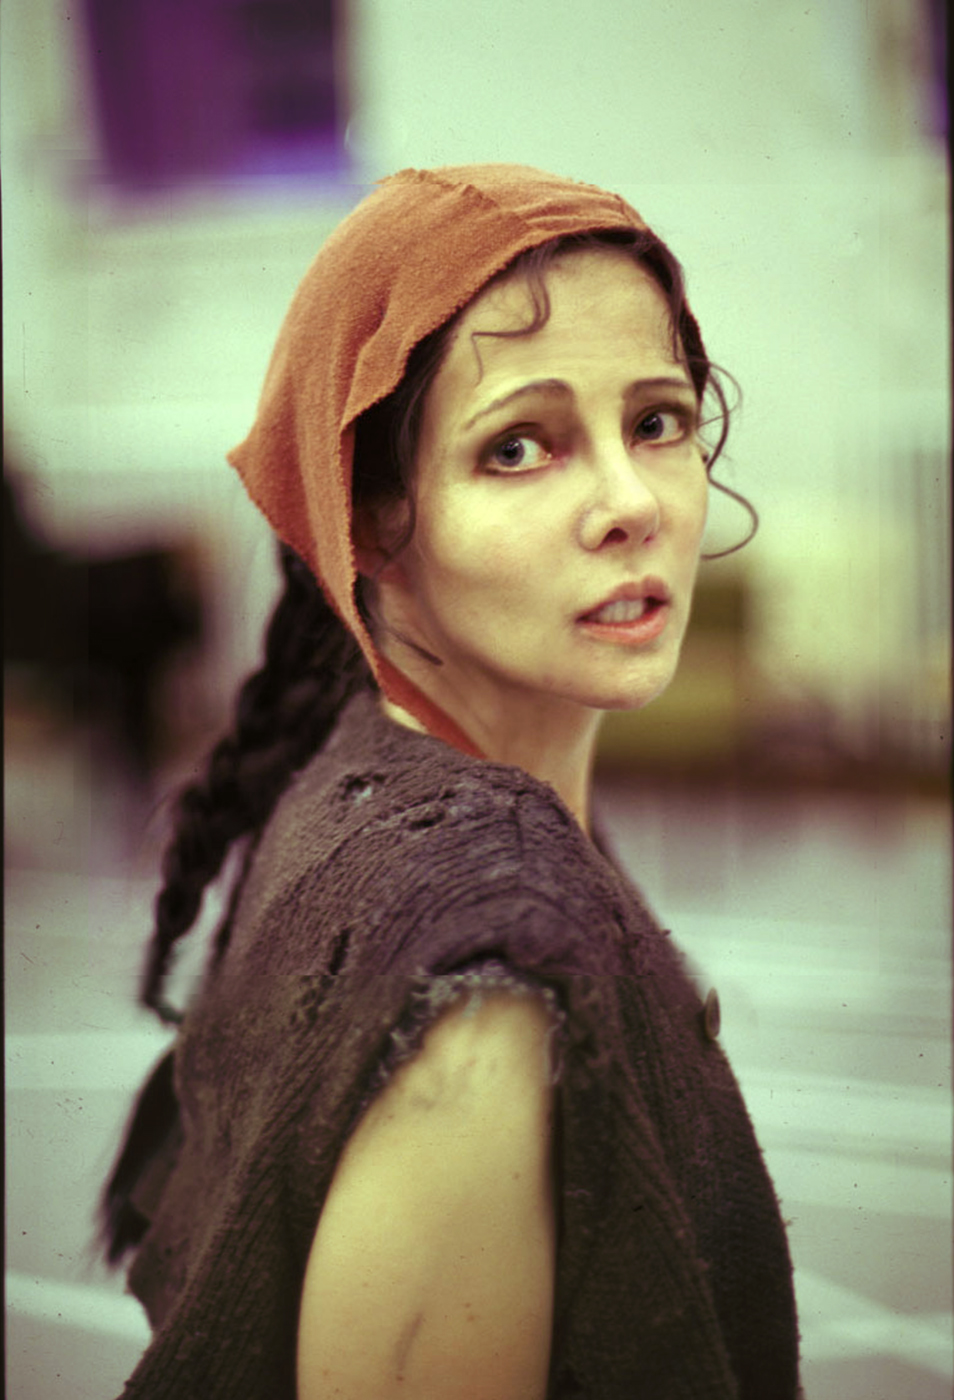 Aviana Alaïs Angelique Adell as Fermina in Man of La Mancha